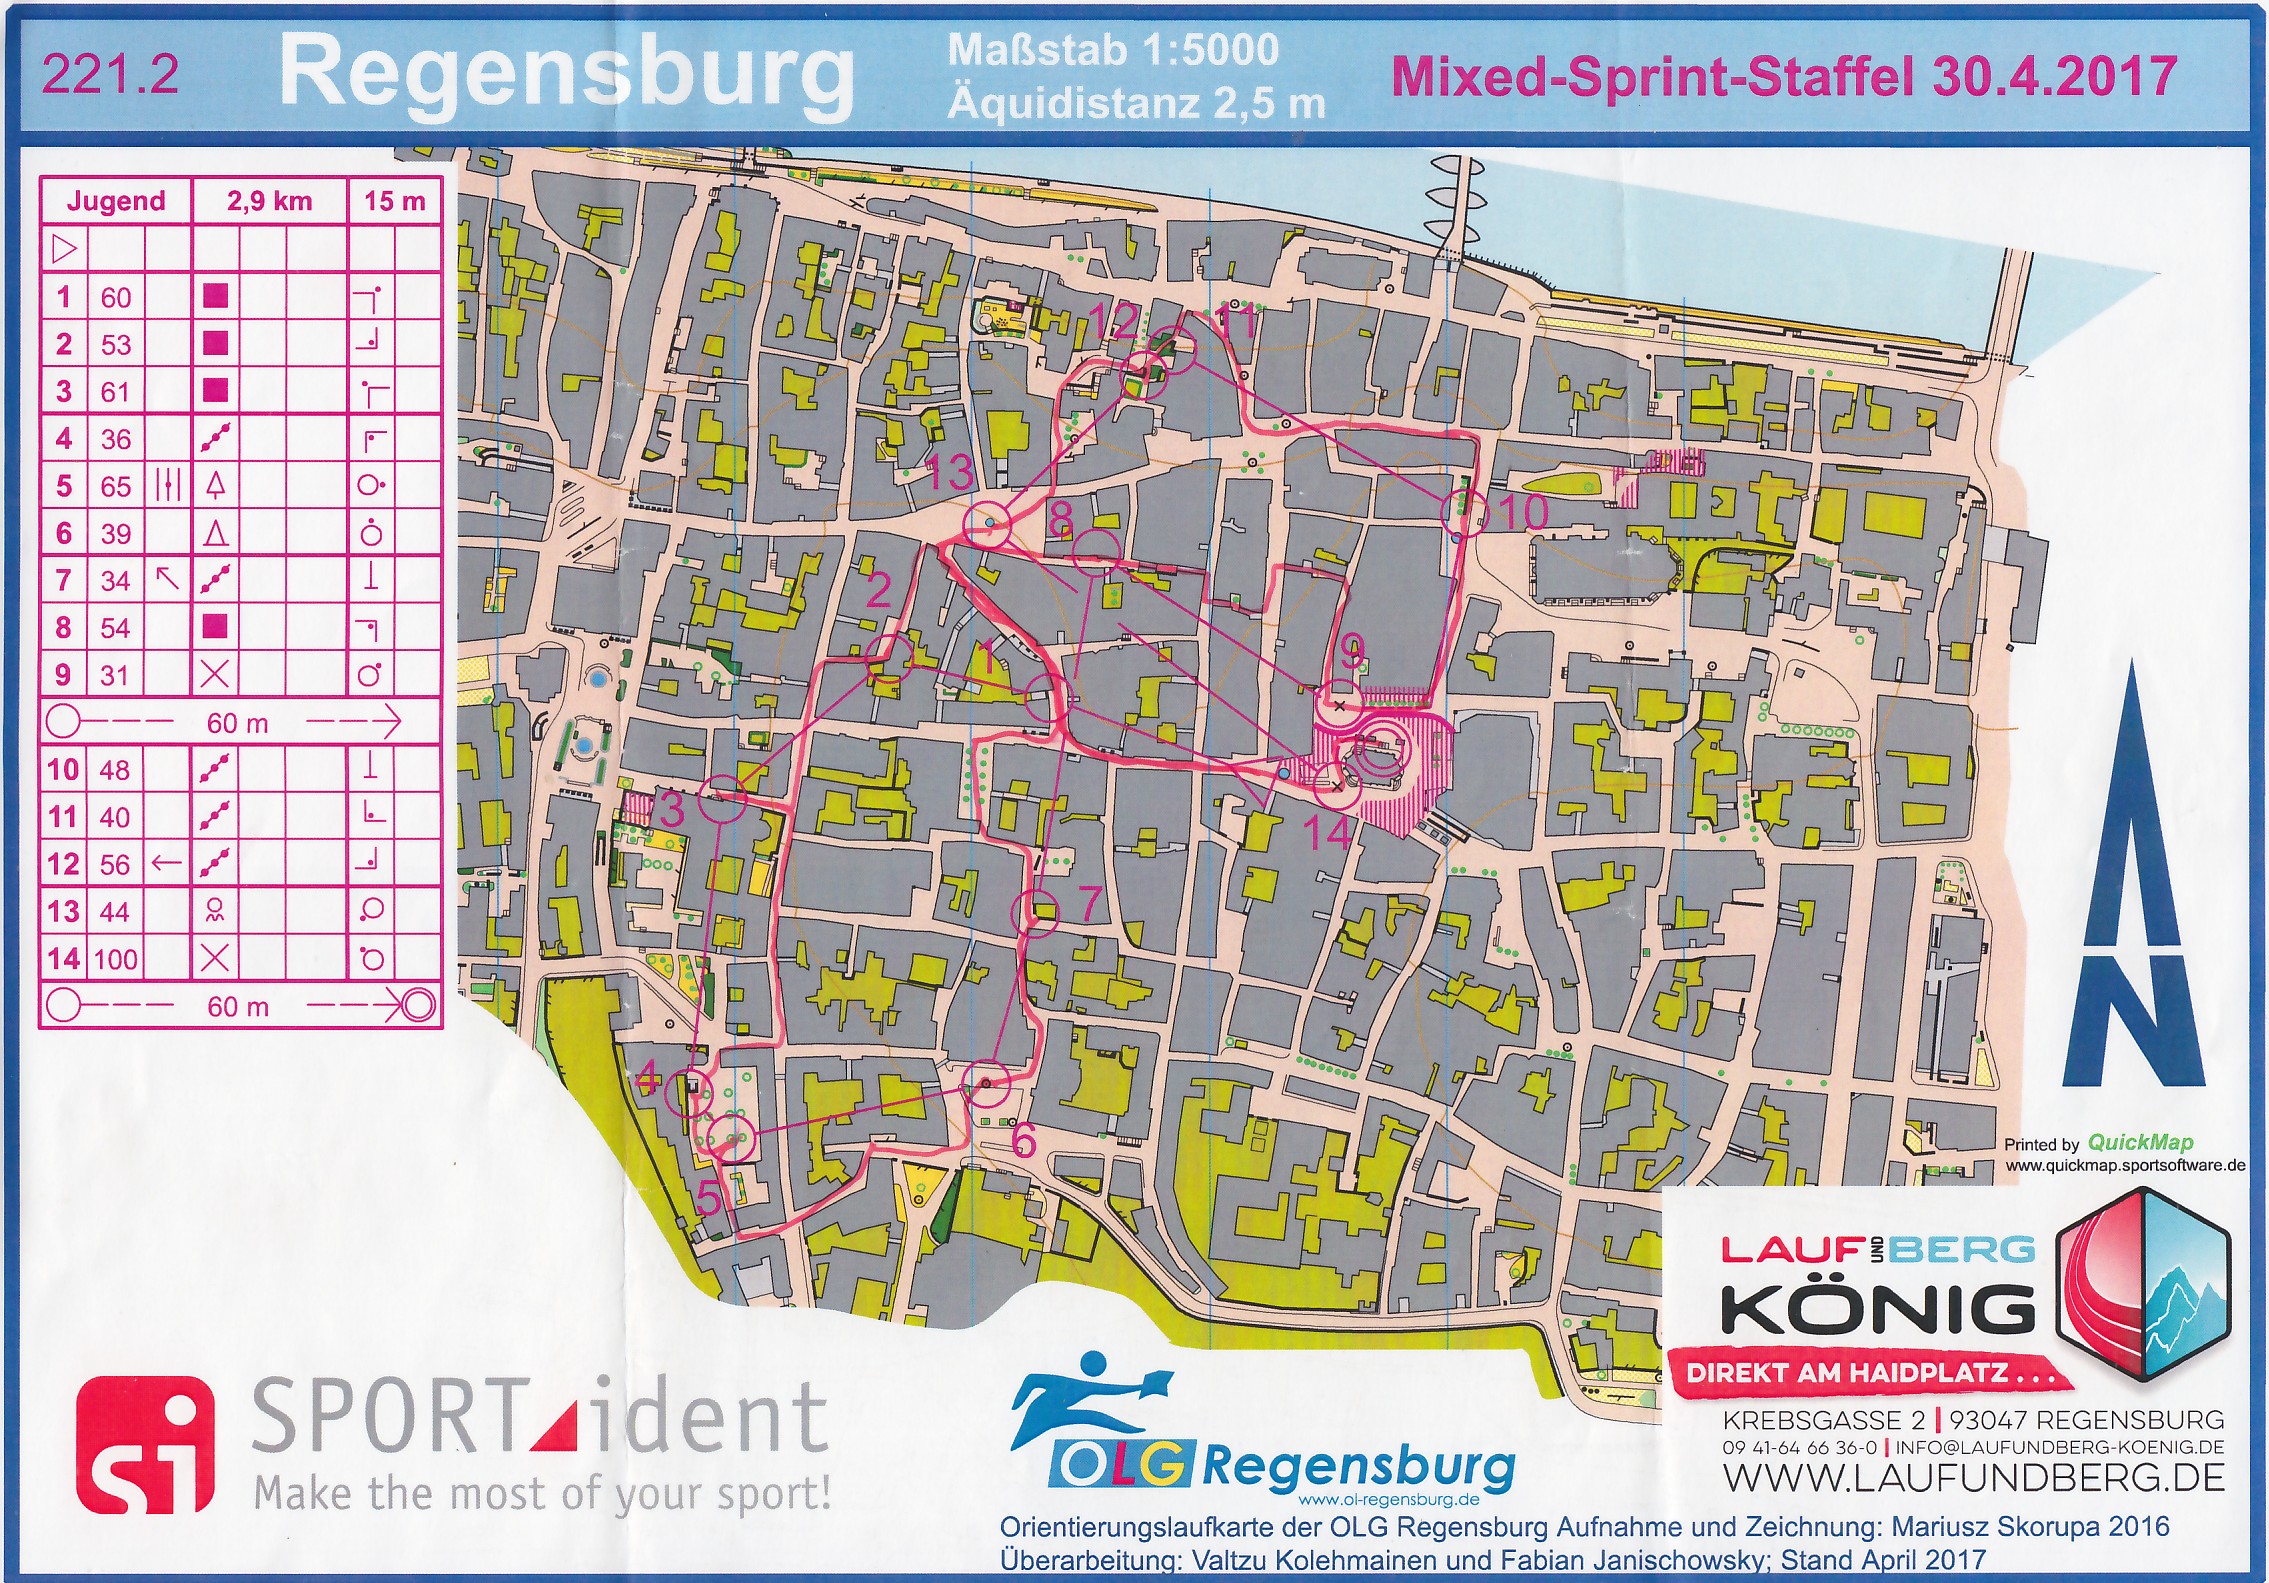 Sprint-Staffel in Regensburg (30/04/2017)